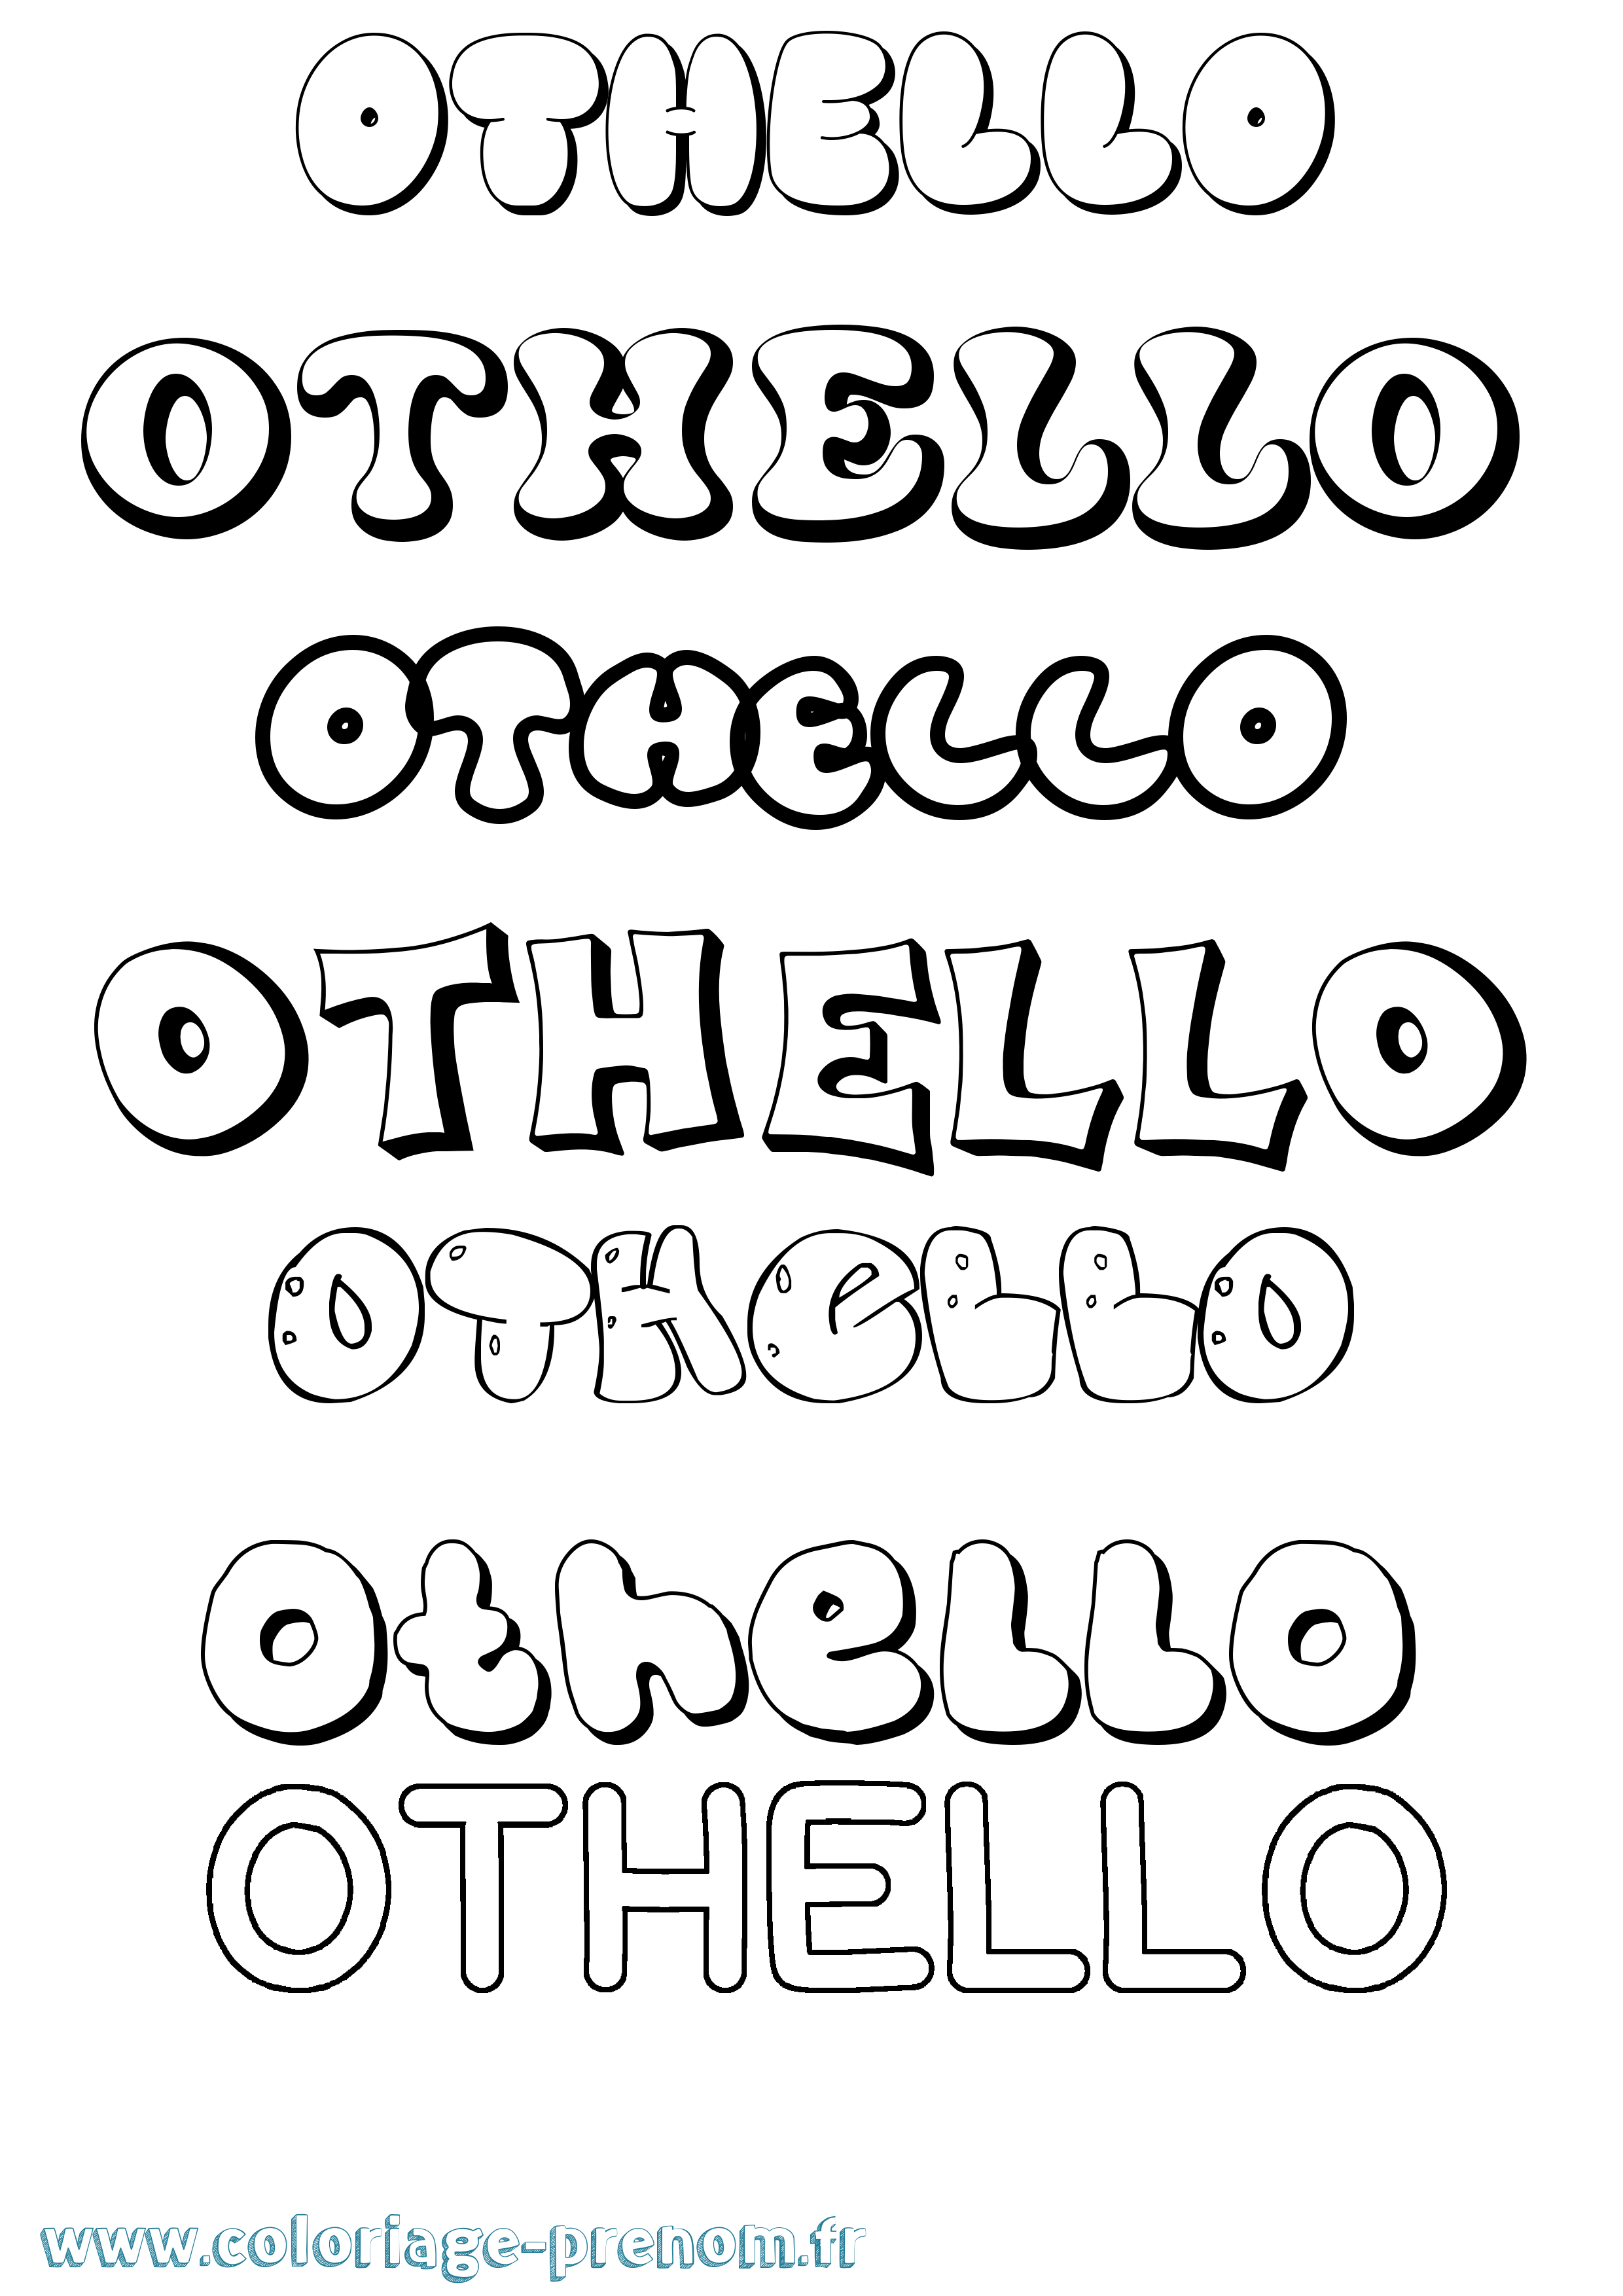 Coloriage prénom Othello Bubble